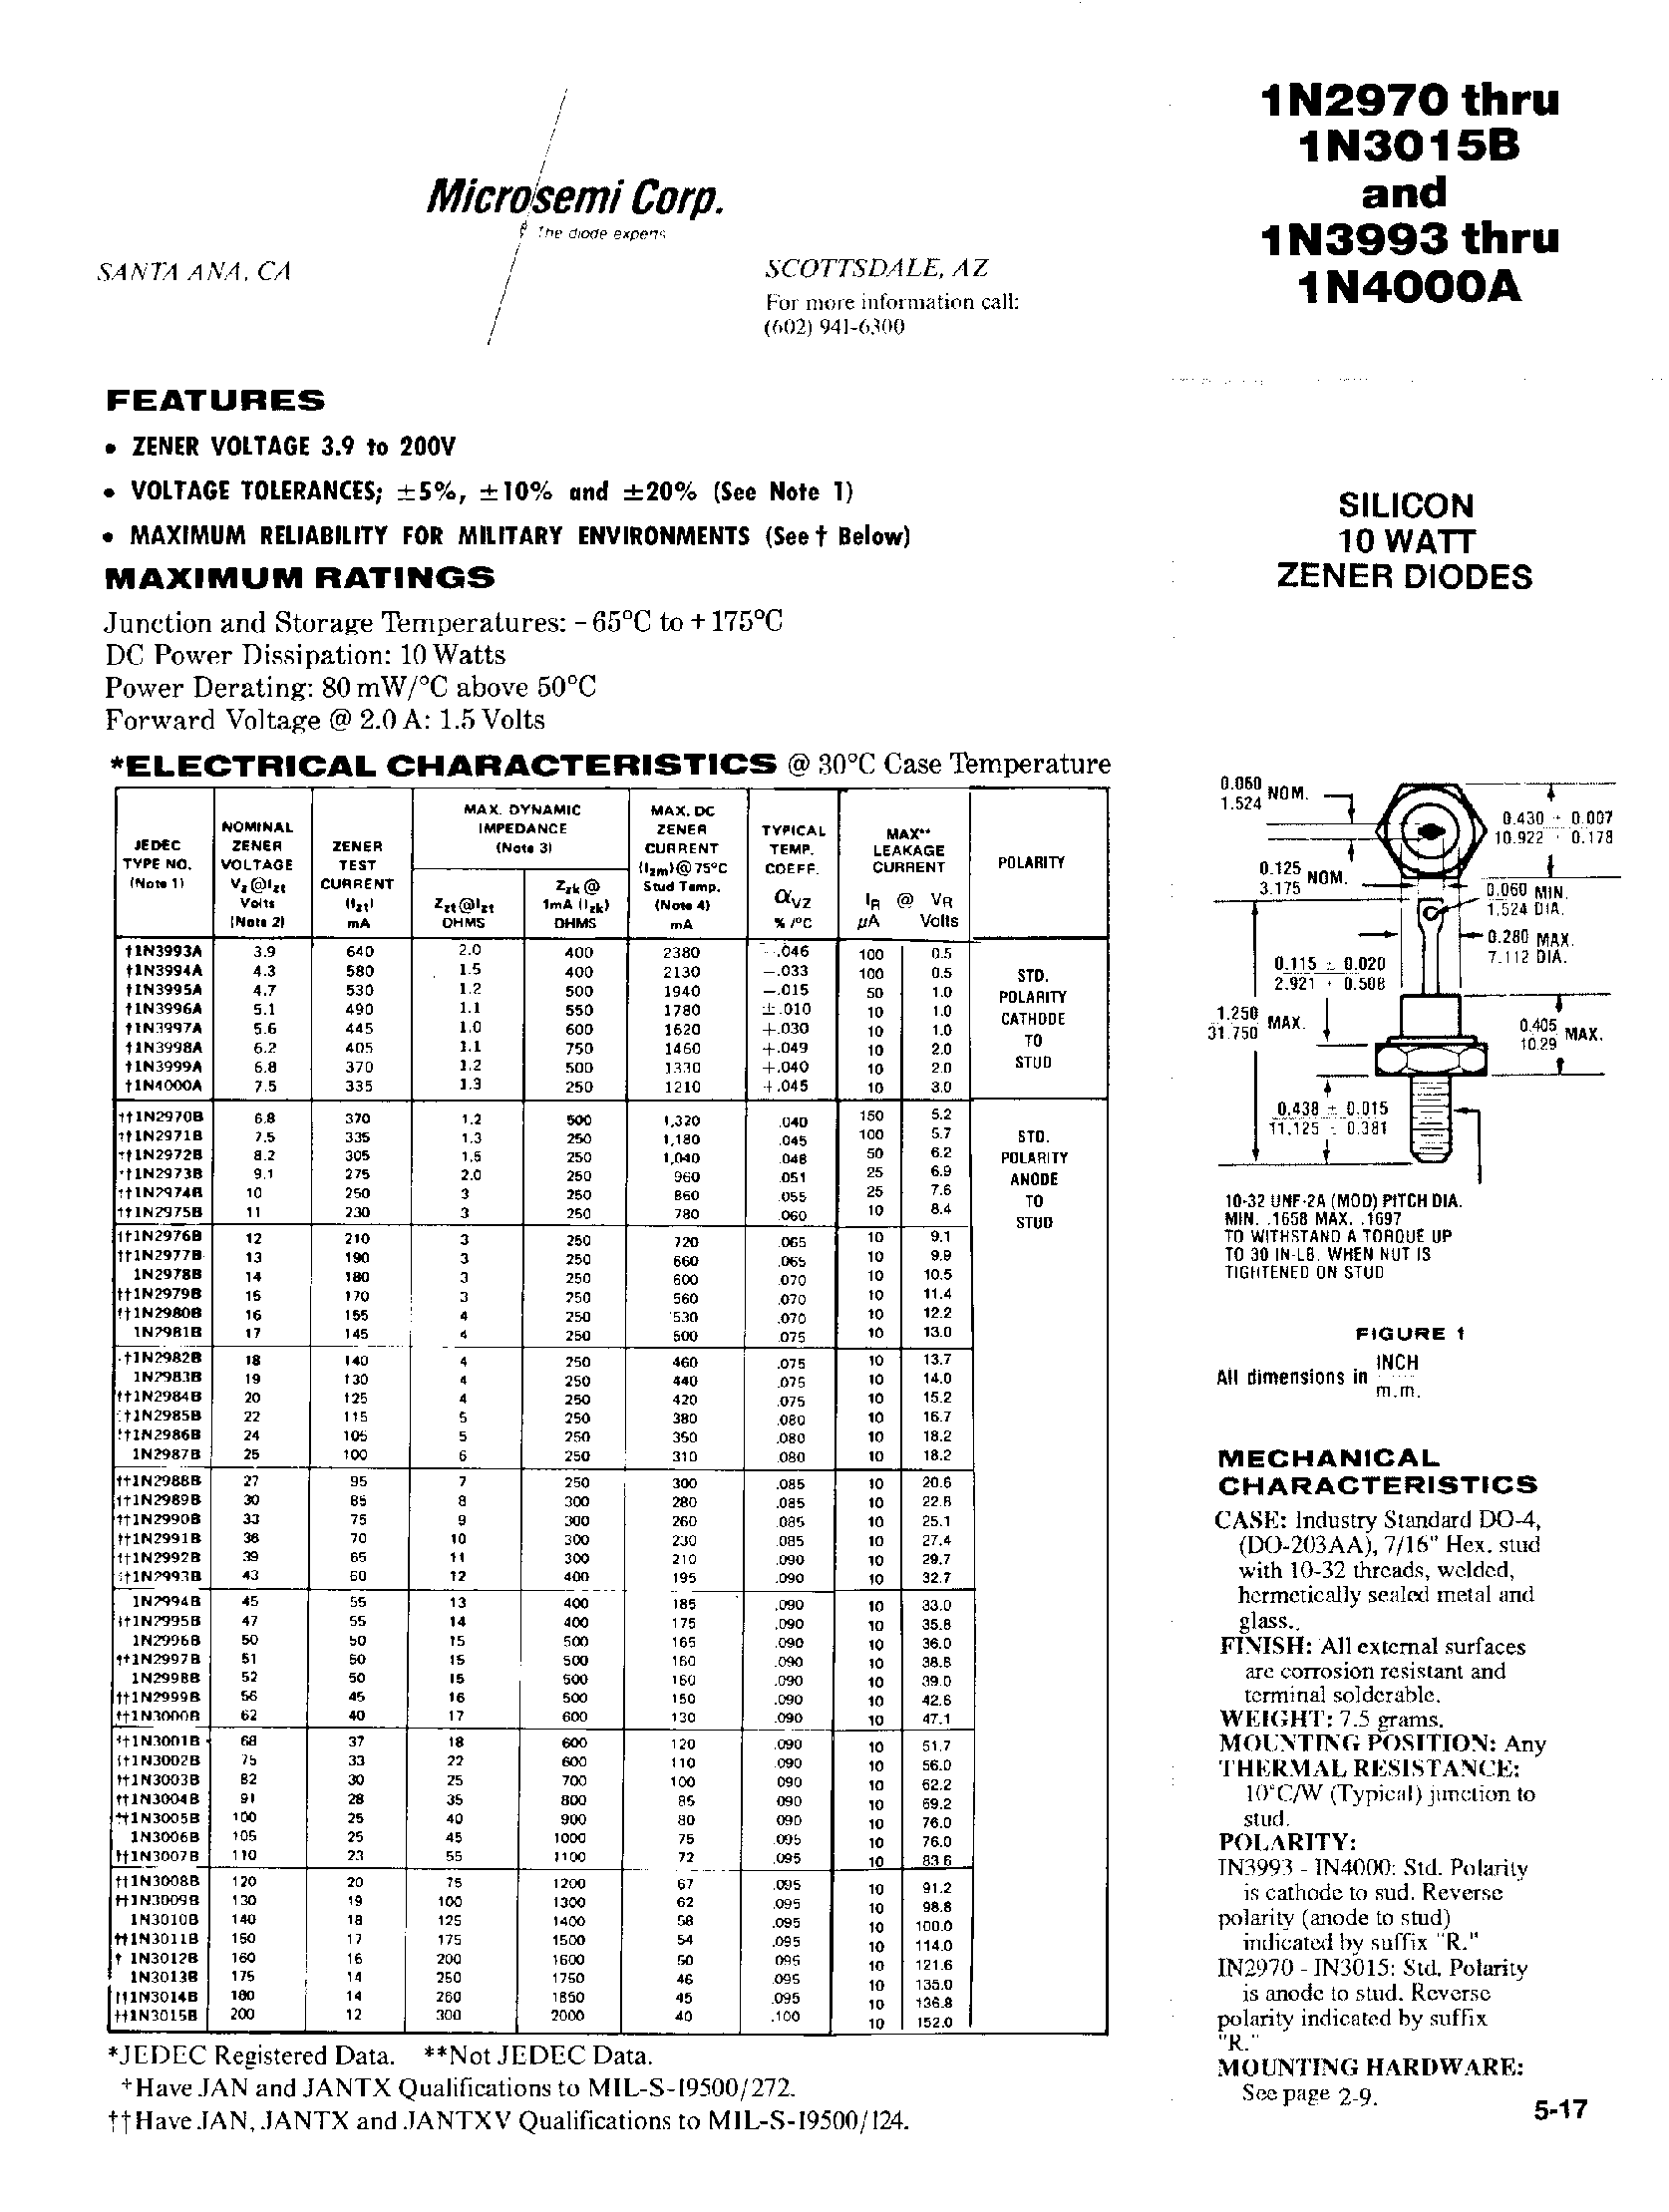 Datasheet 1N2981B - Silicon 10 WATT Zener Diodes page 1